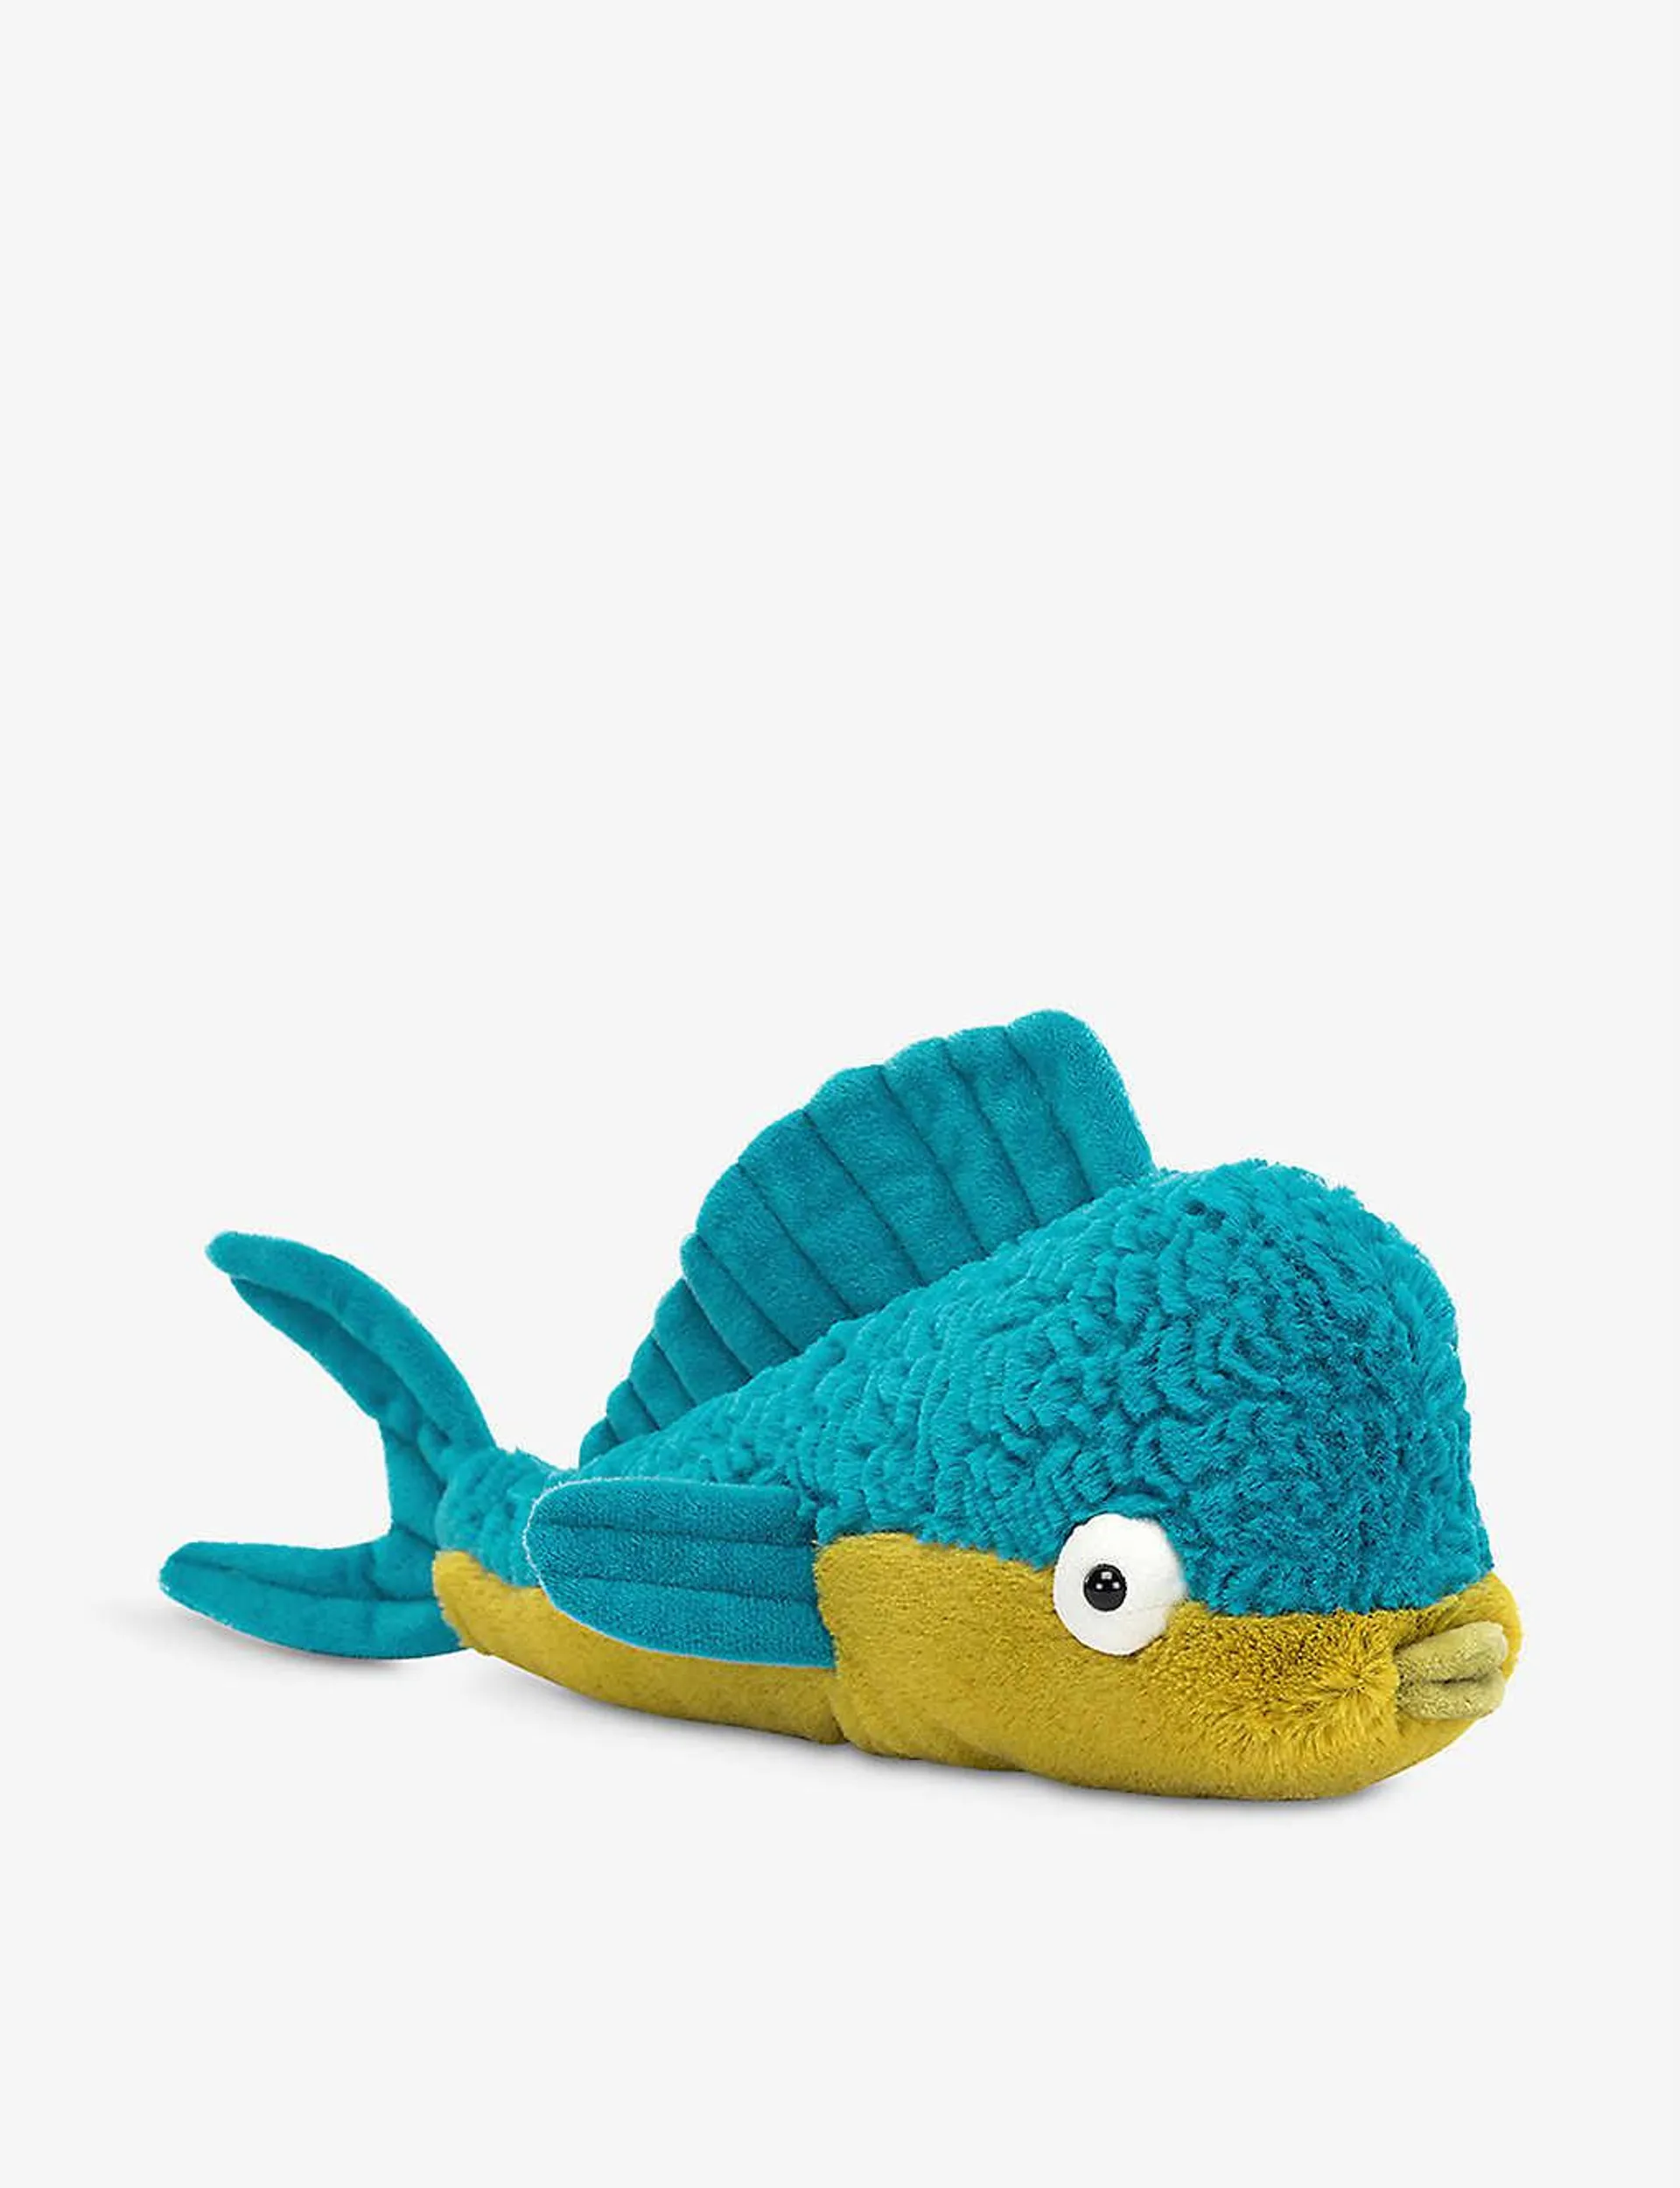 Delano Dorado Fish soft toy 12cm